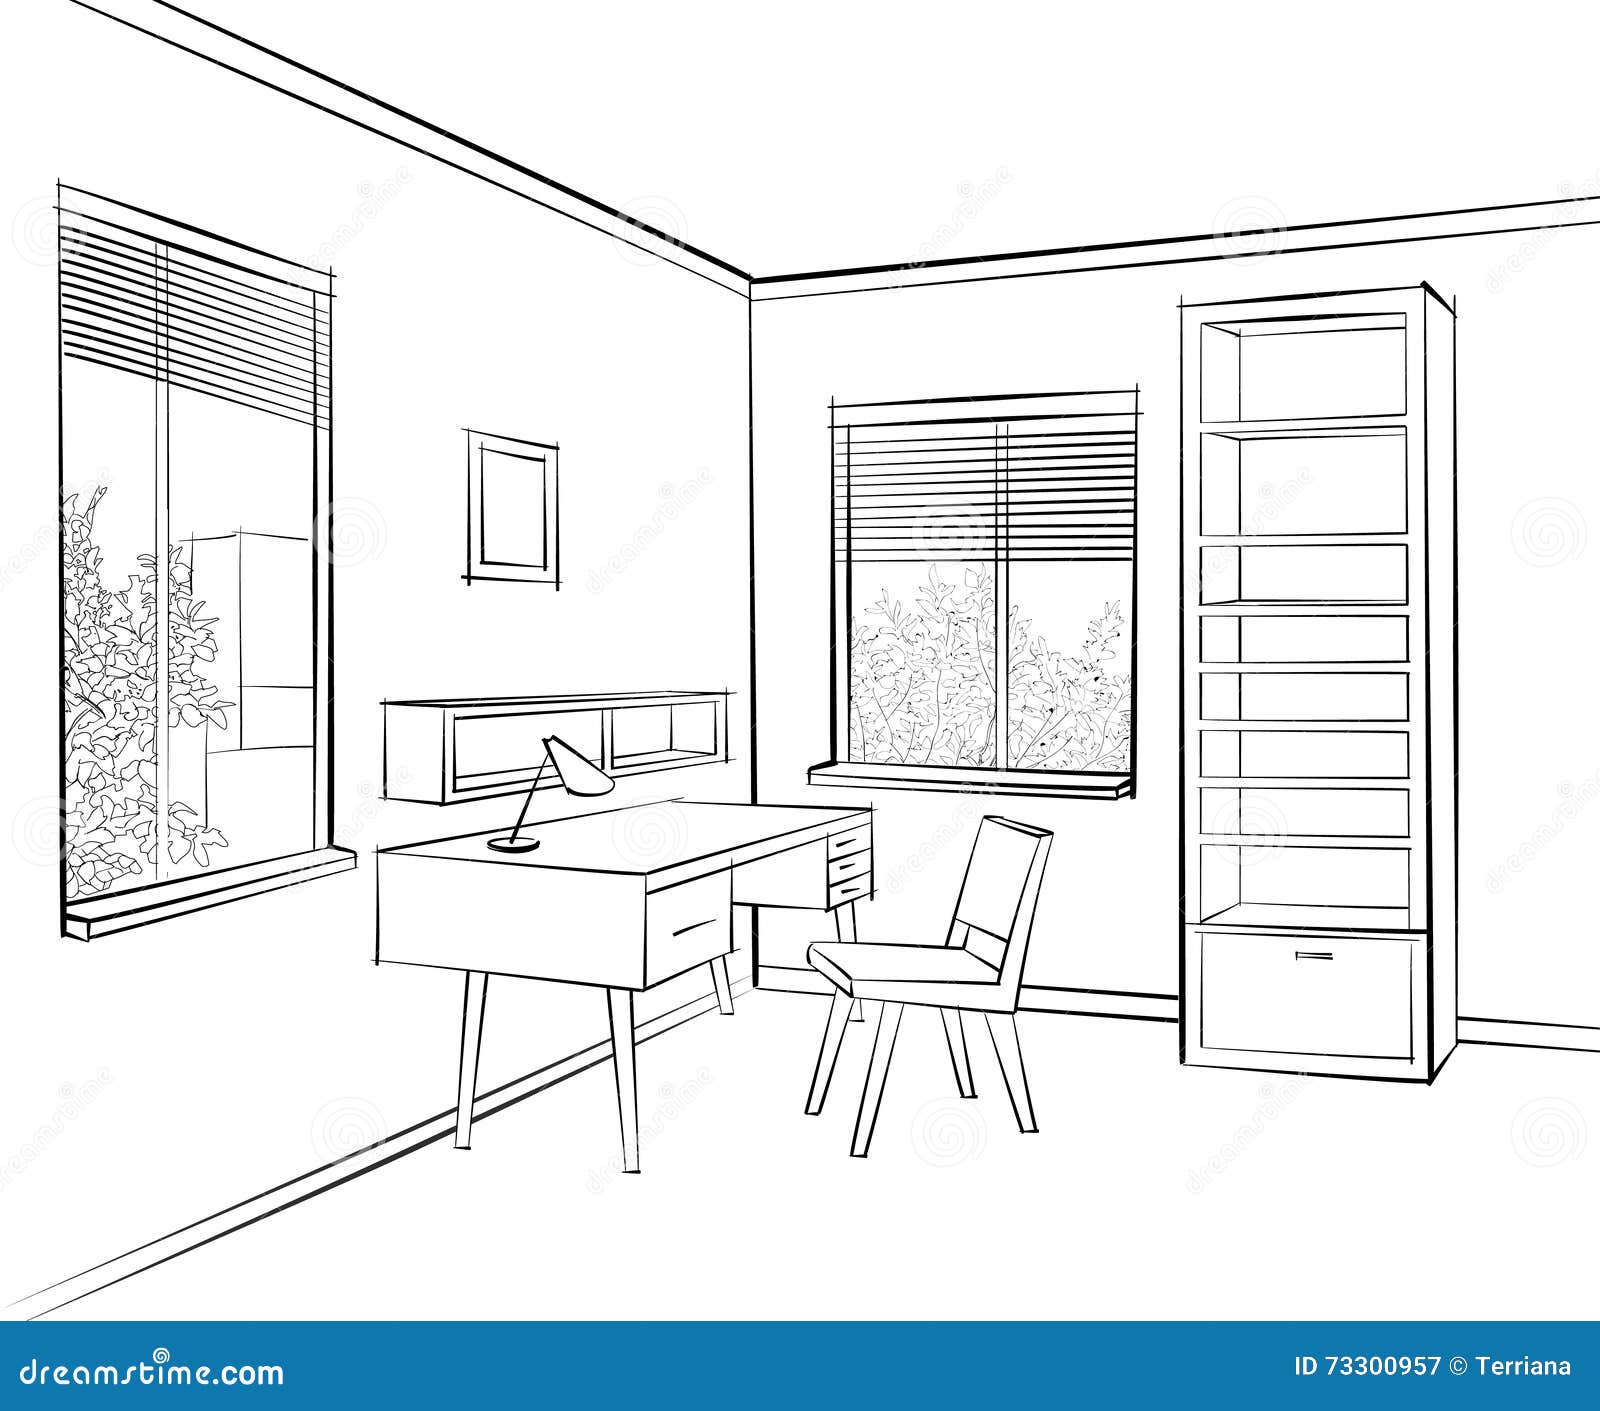 Home interior sketch | Illustrations ~ Creative Market